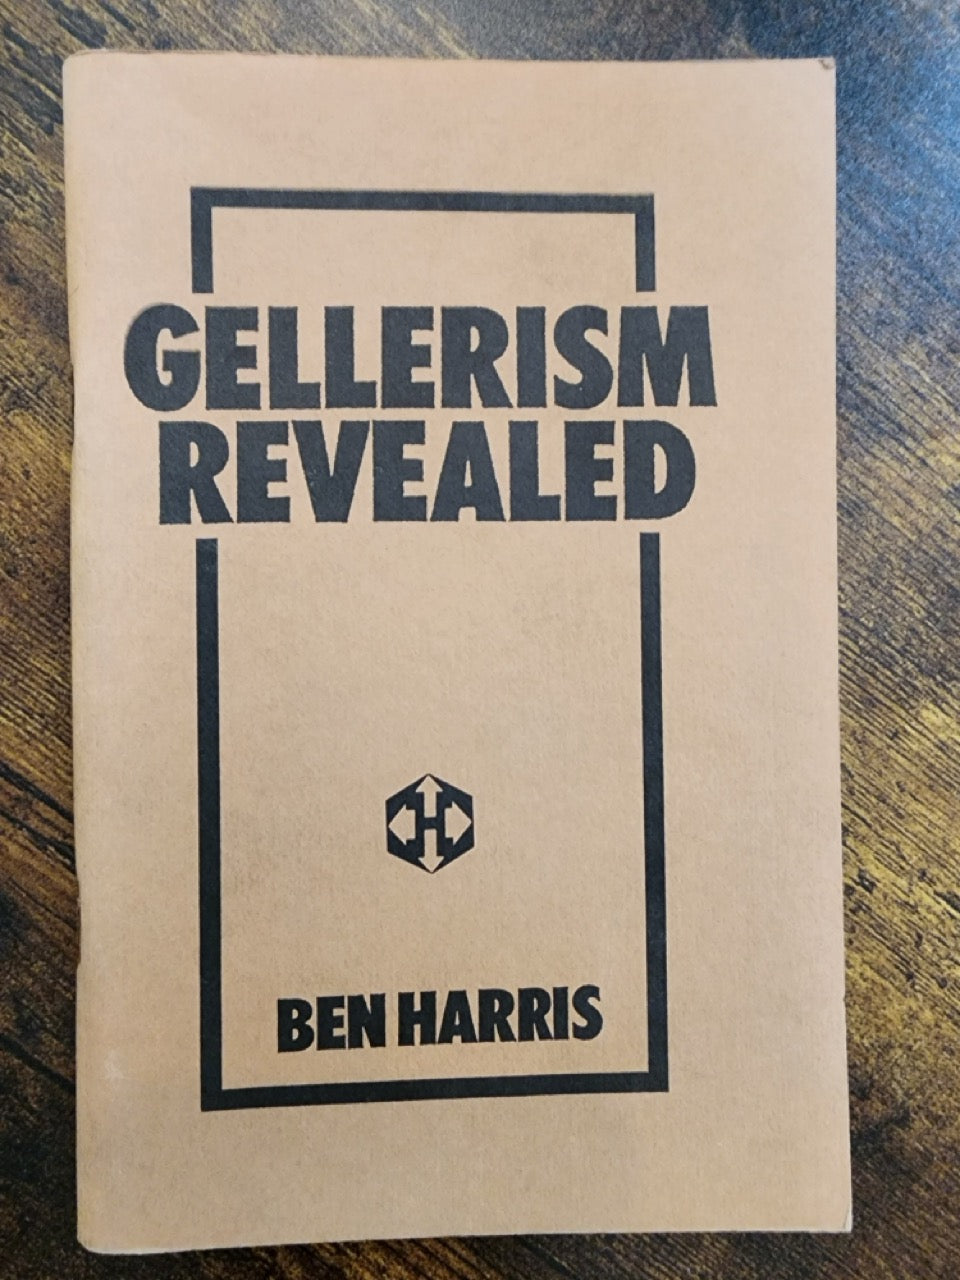 7 titles By Ben Harris - Ben Harris